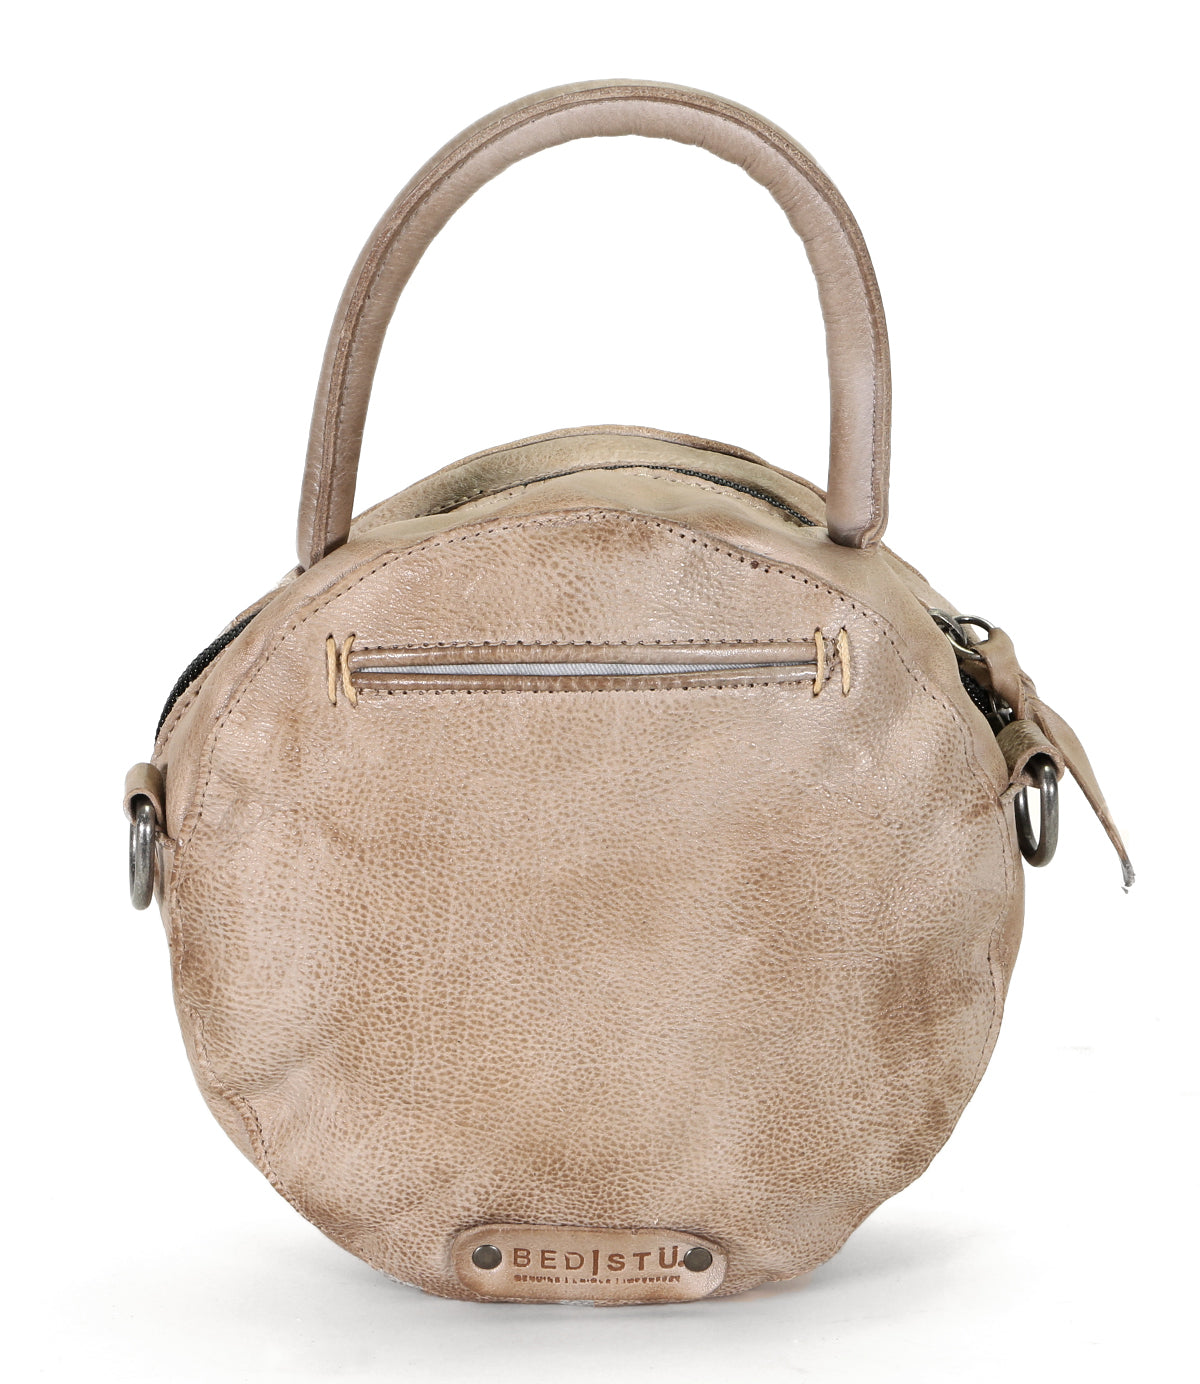 A Bed Stu Arenfield beige leather handbag with a zipper.